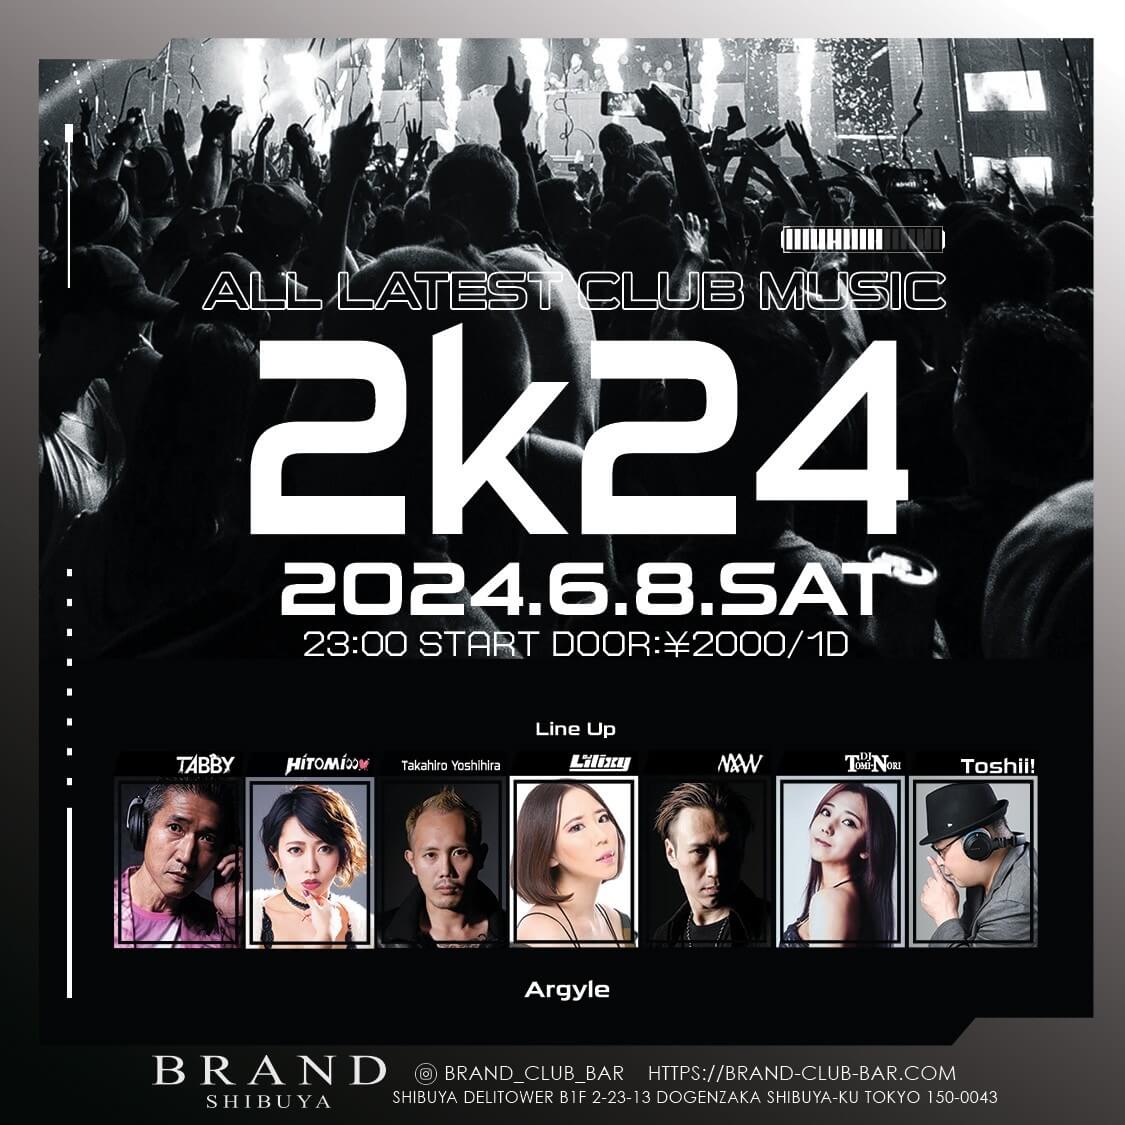 ALL LATEST CLUB MUSIC 2k24 2024年06月08日（土曜日）に渋谷 クラブのBRAND SHIBUYAで開催されるALL MIXイベント